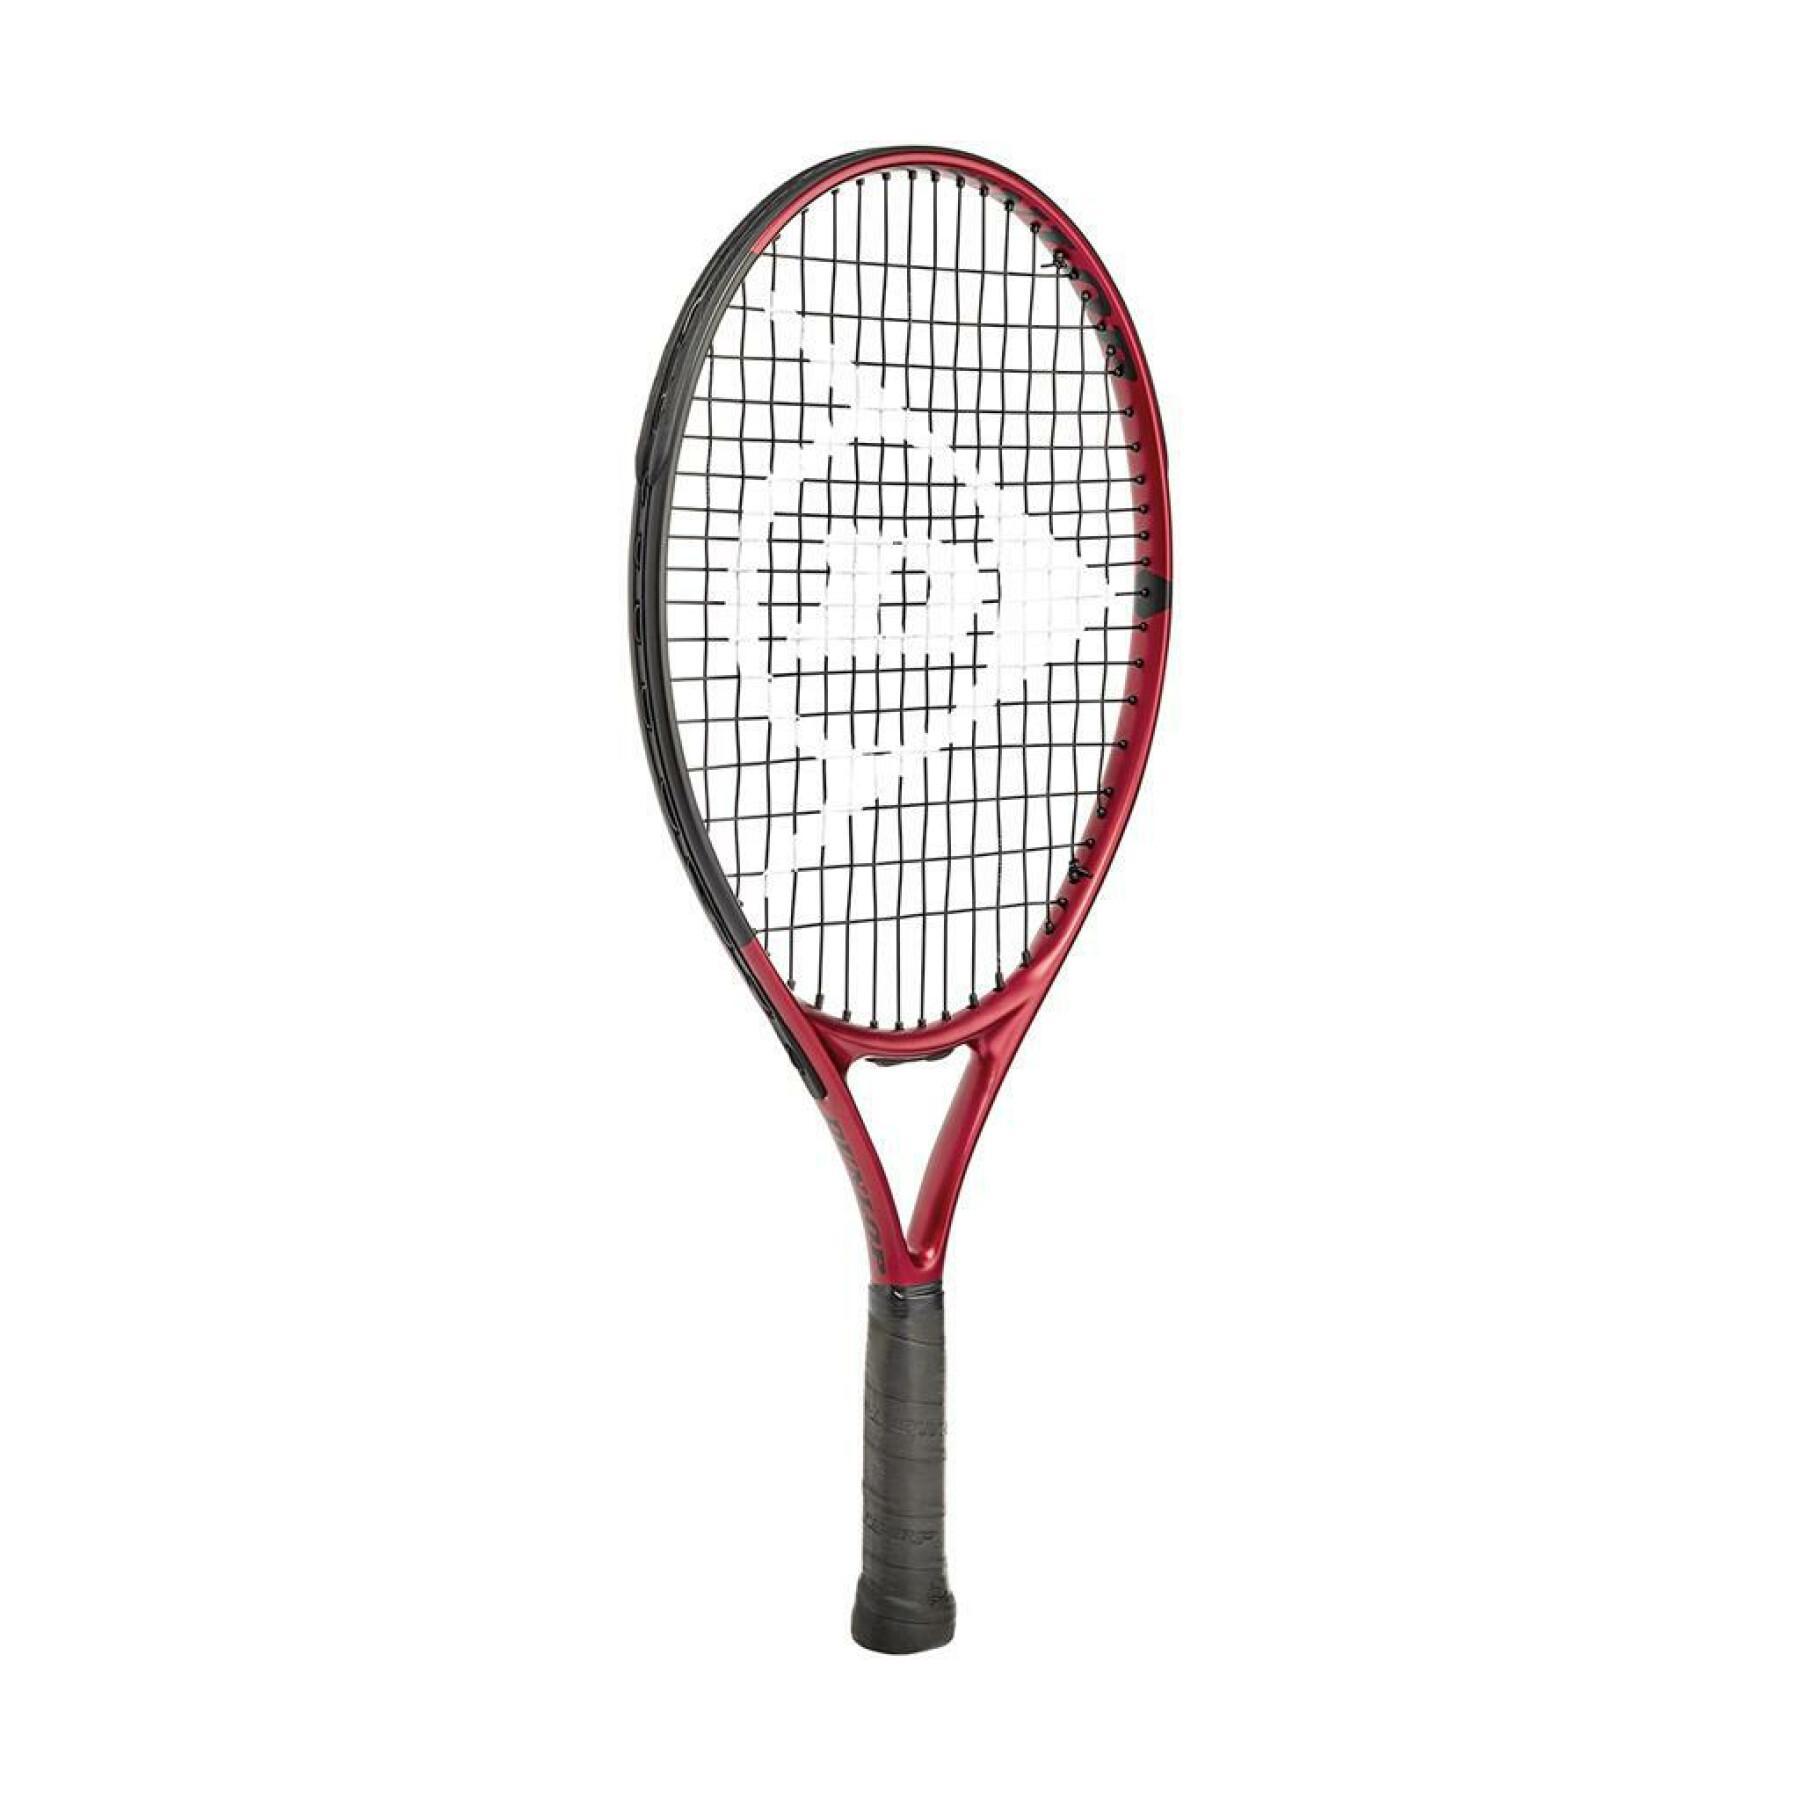 Children's racket Dunlop cx 21 g8 h000